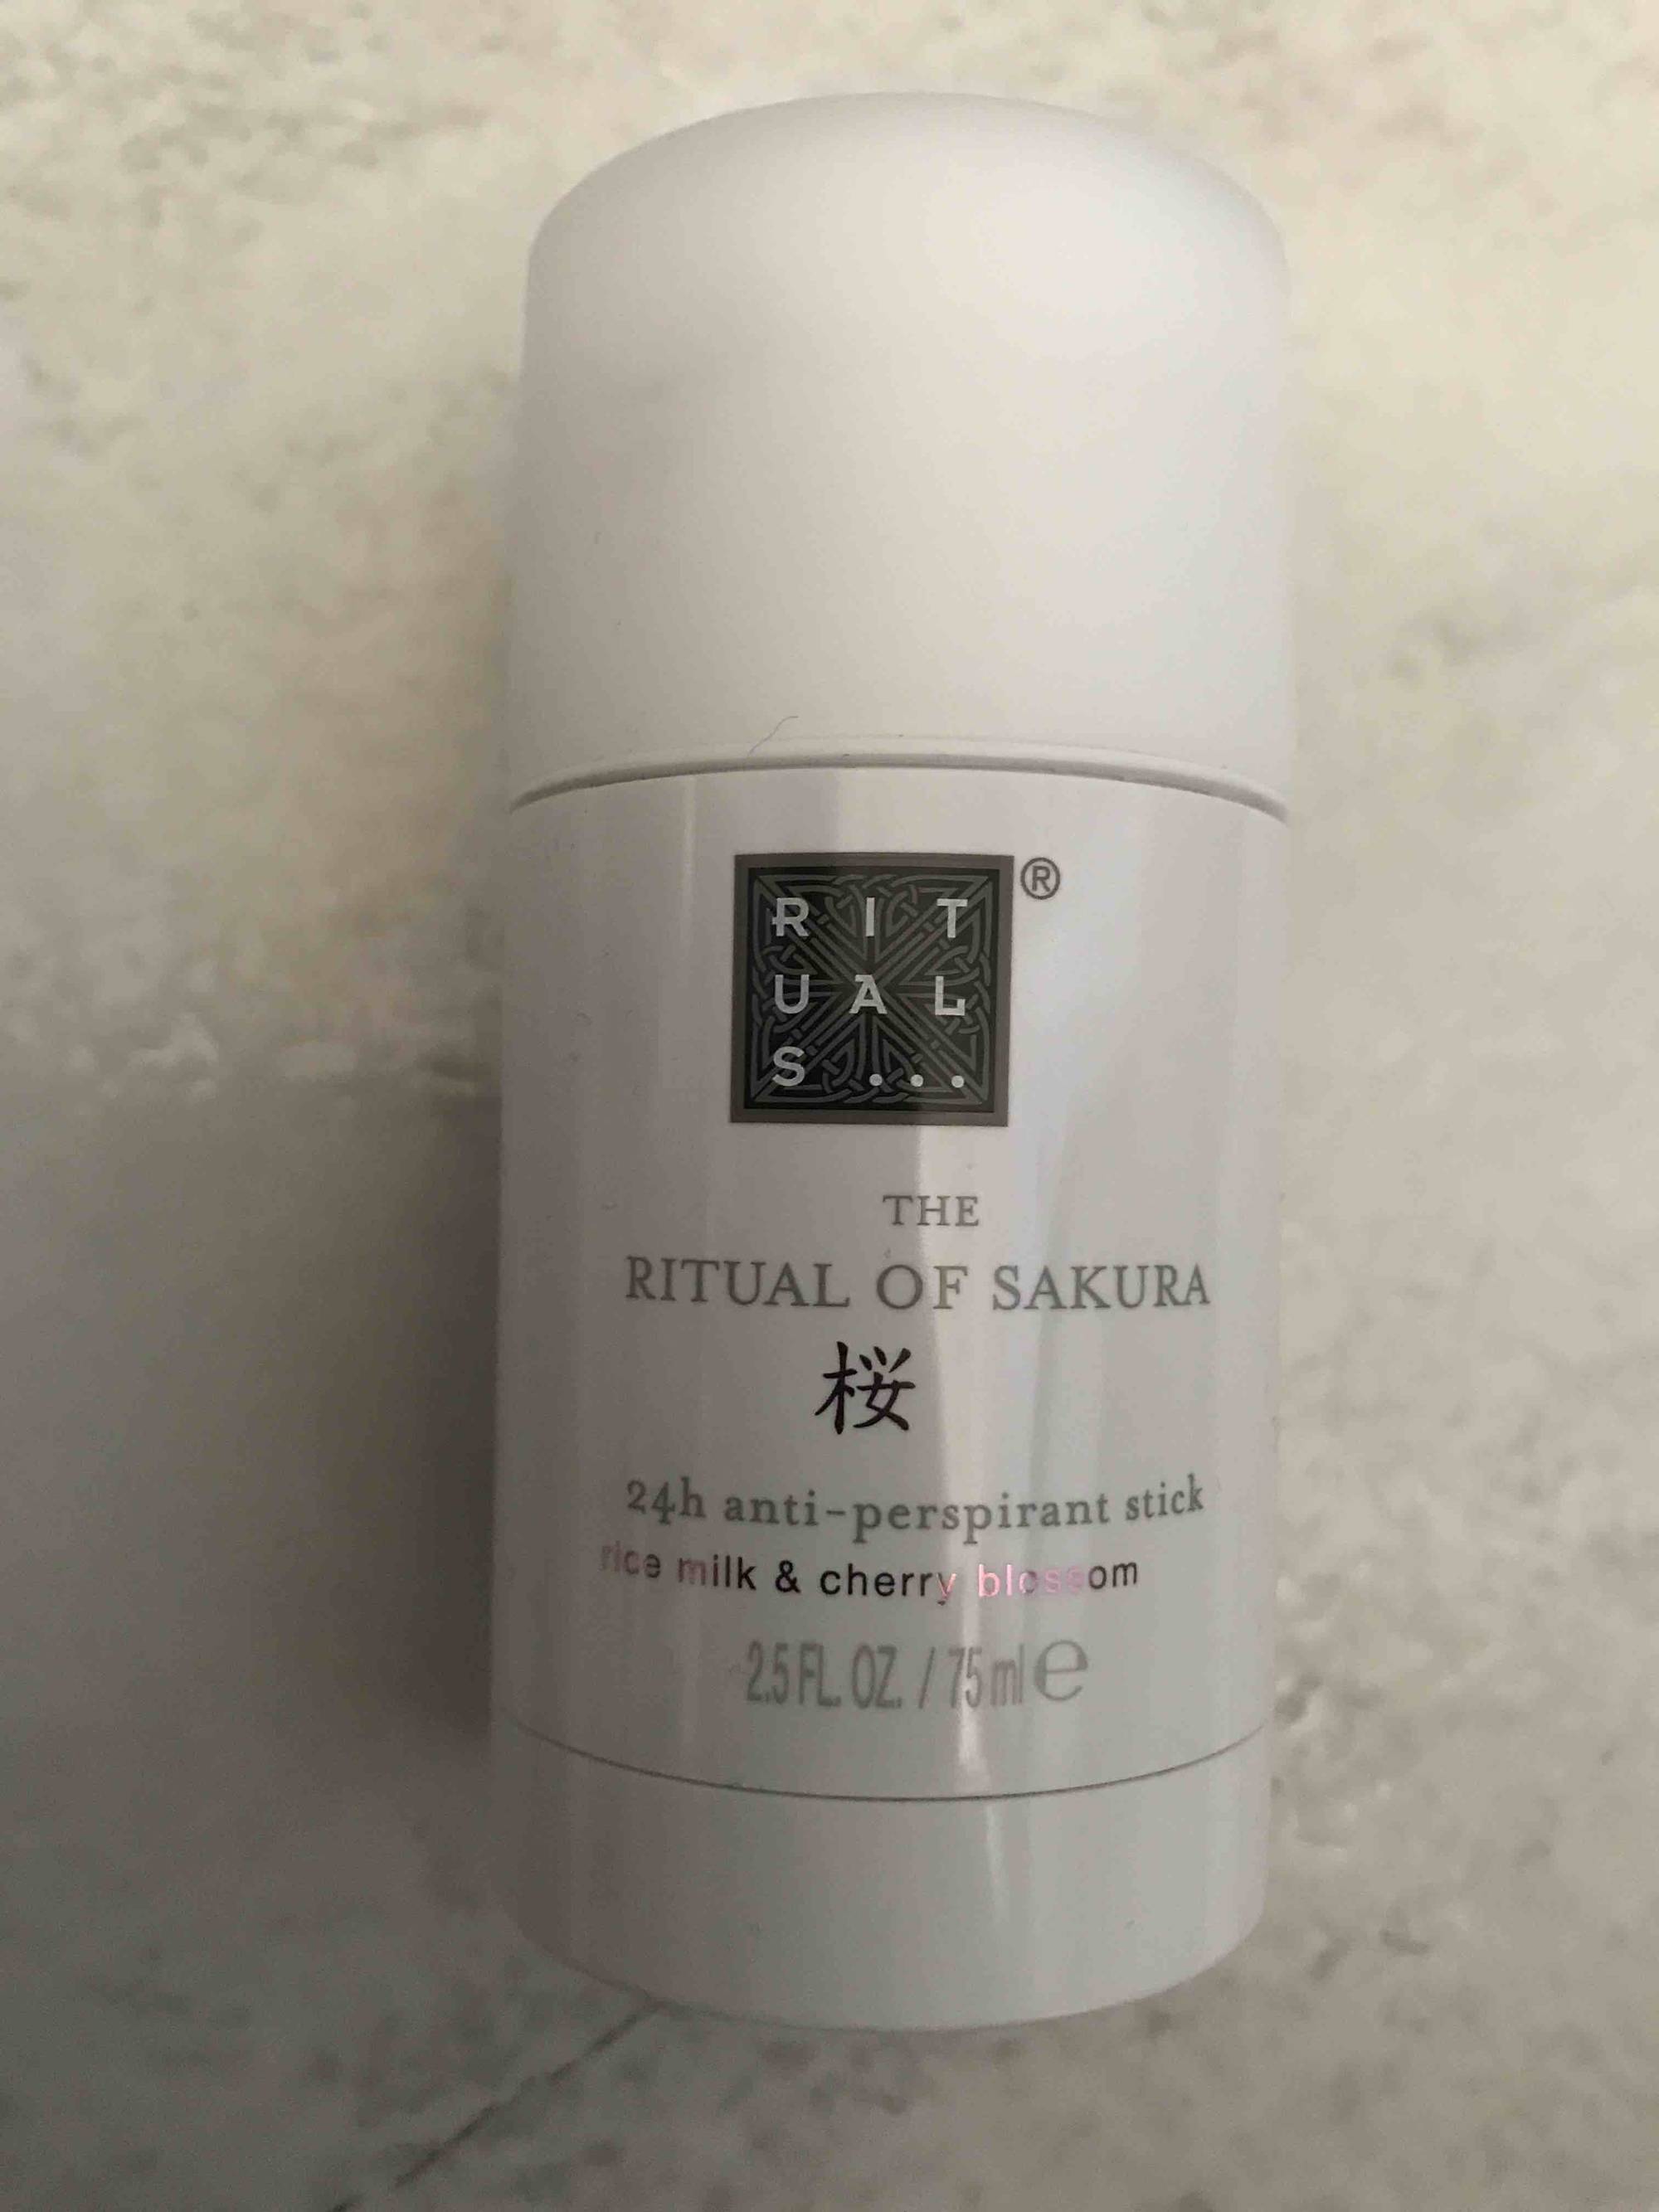 RITUALS - The ritual of Sakura - 24h anti-perspirant stick